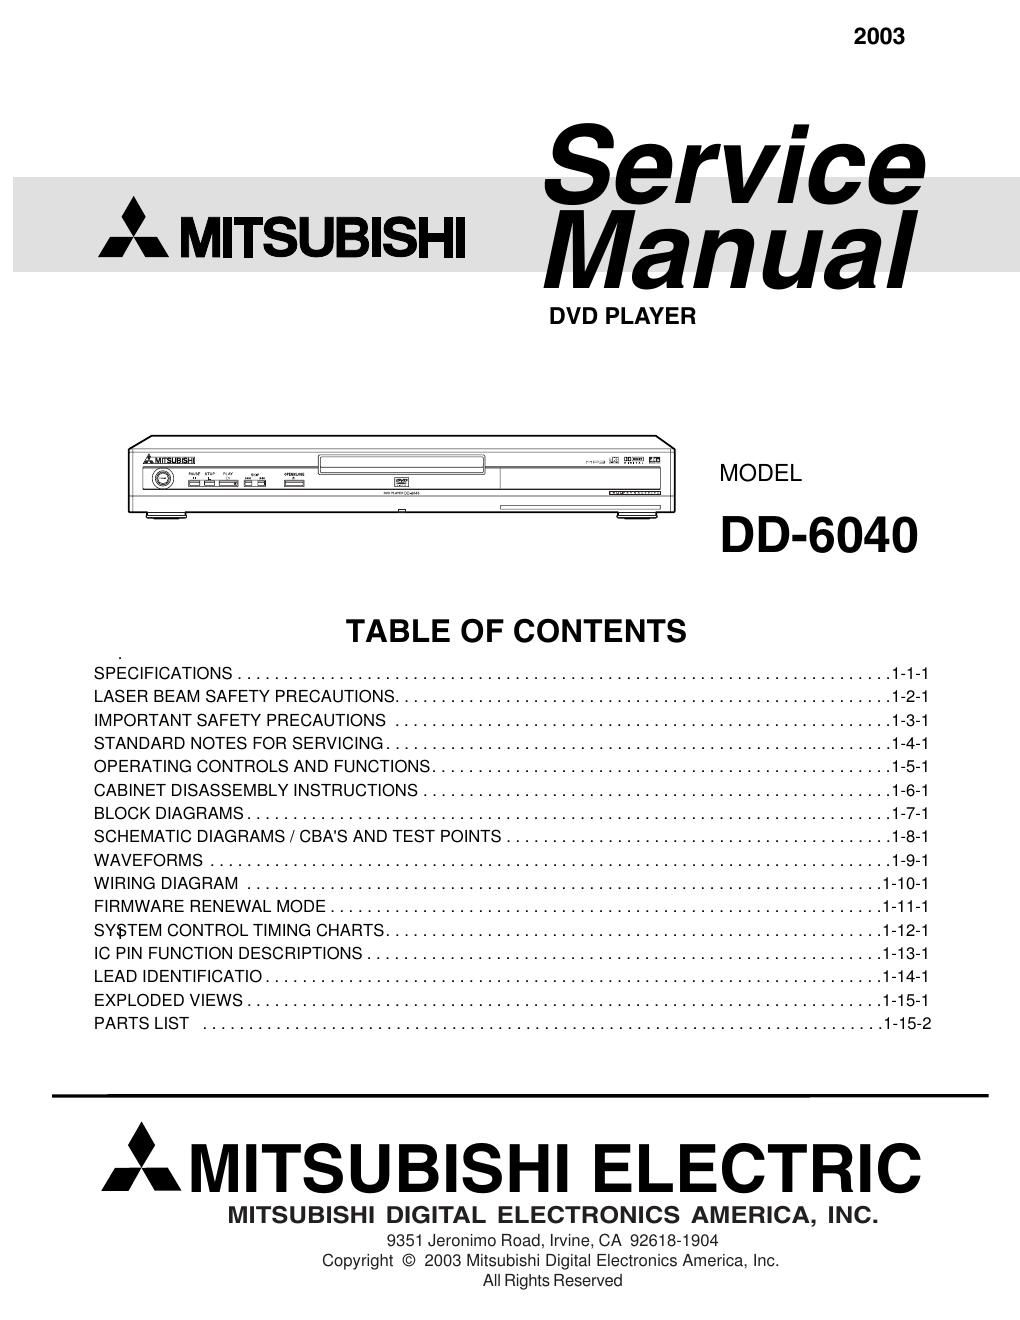 mitsubishi dd 6040 service manual